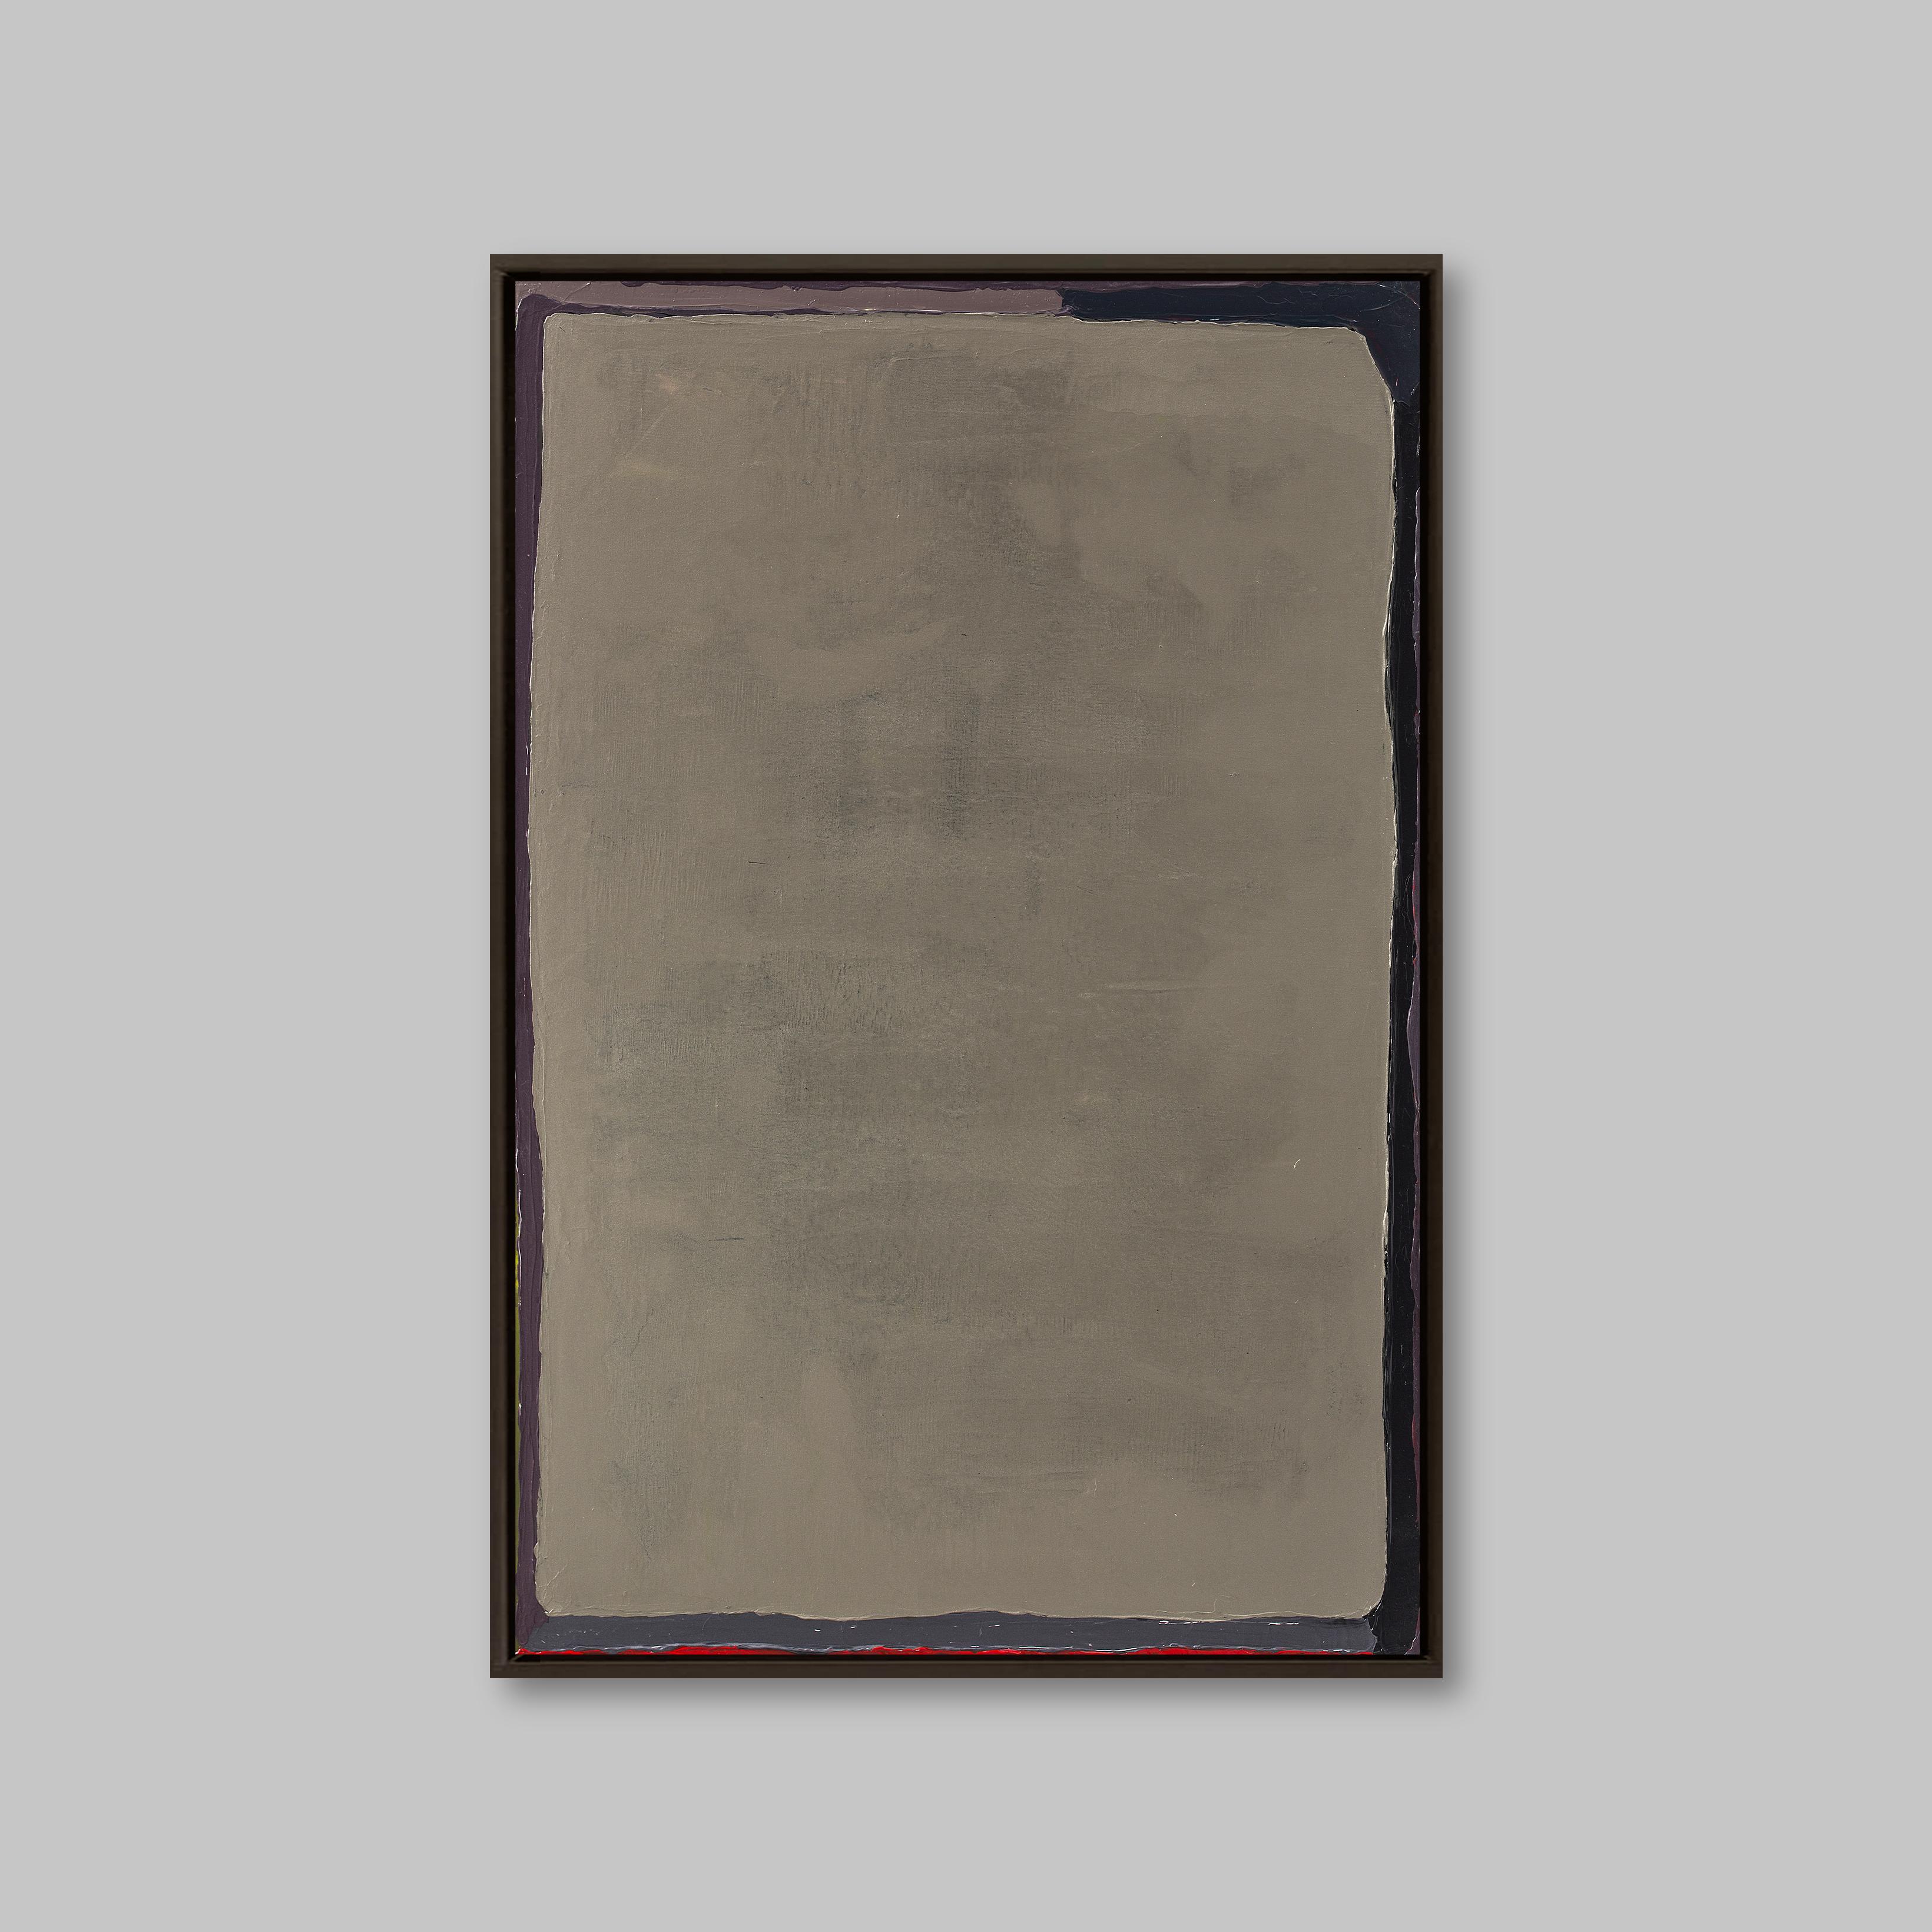 Glitch Exodus 25, 2015
115 x 90 cm
Peinture sur toile